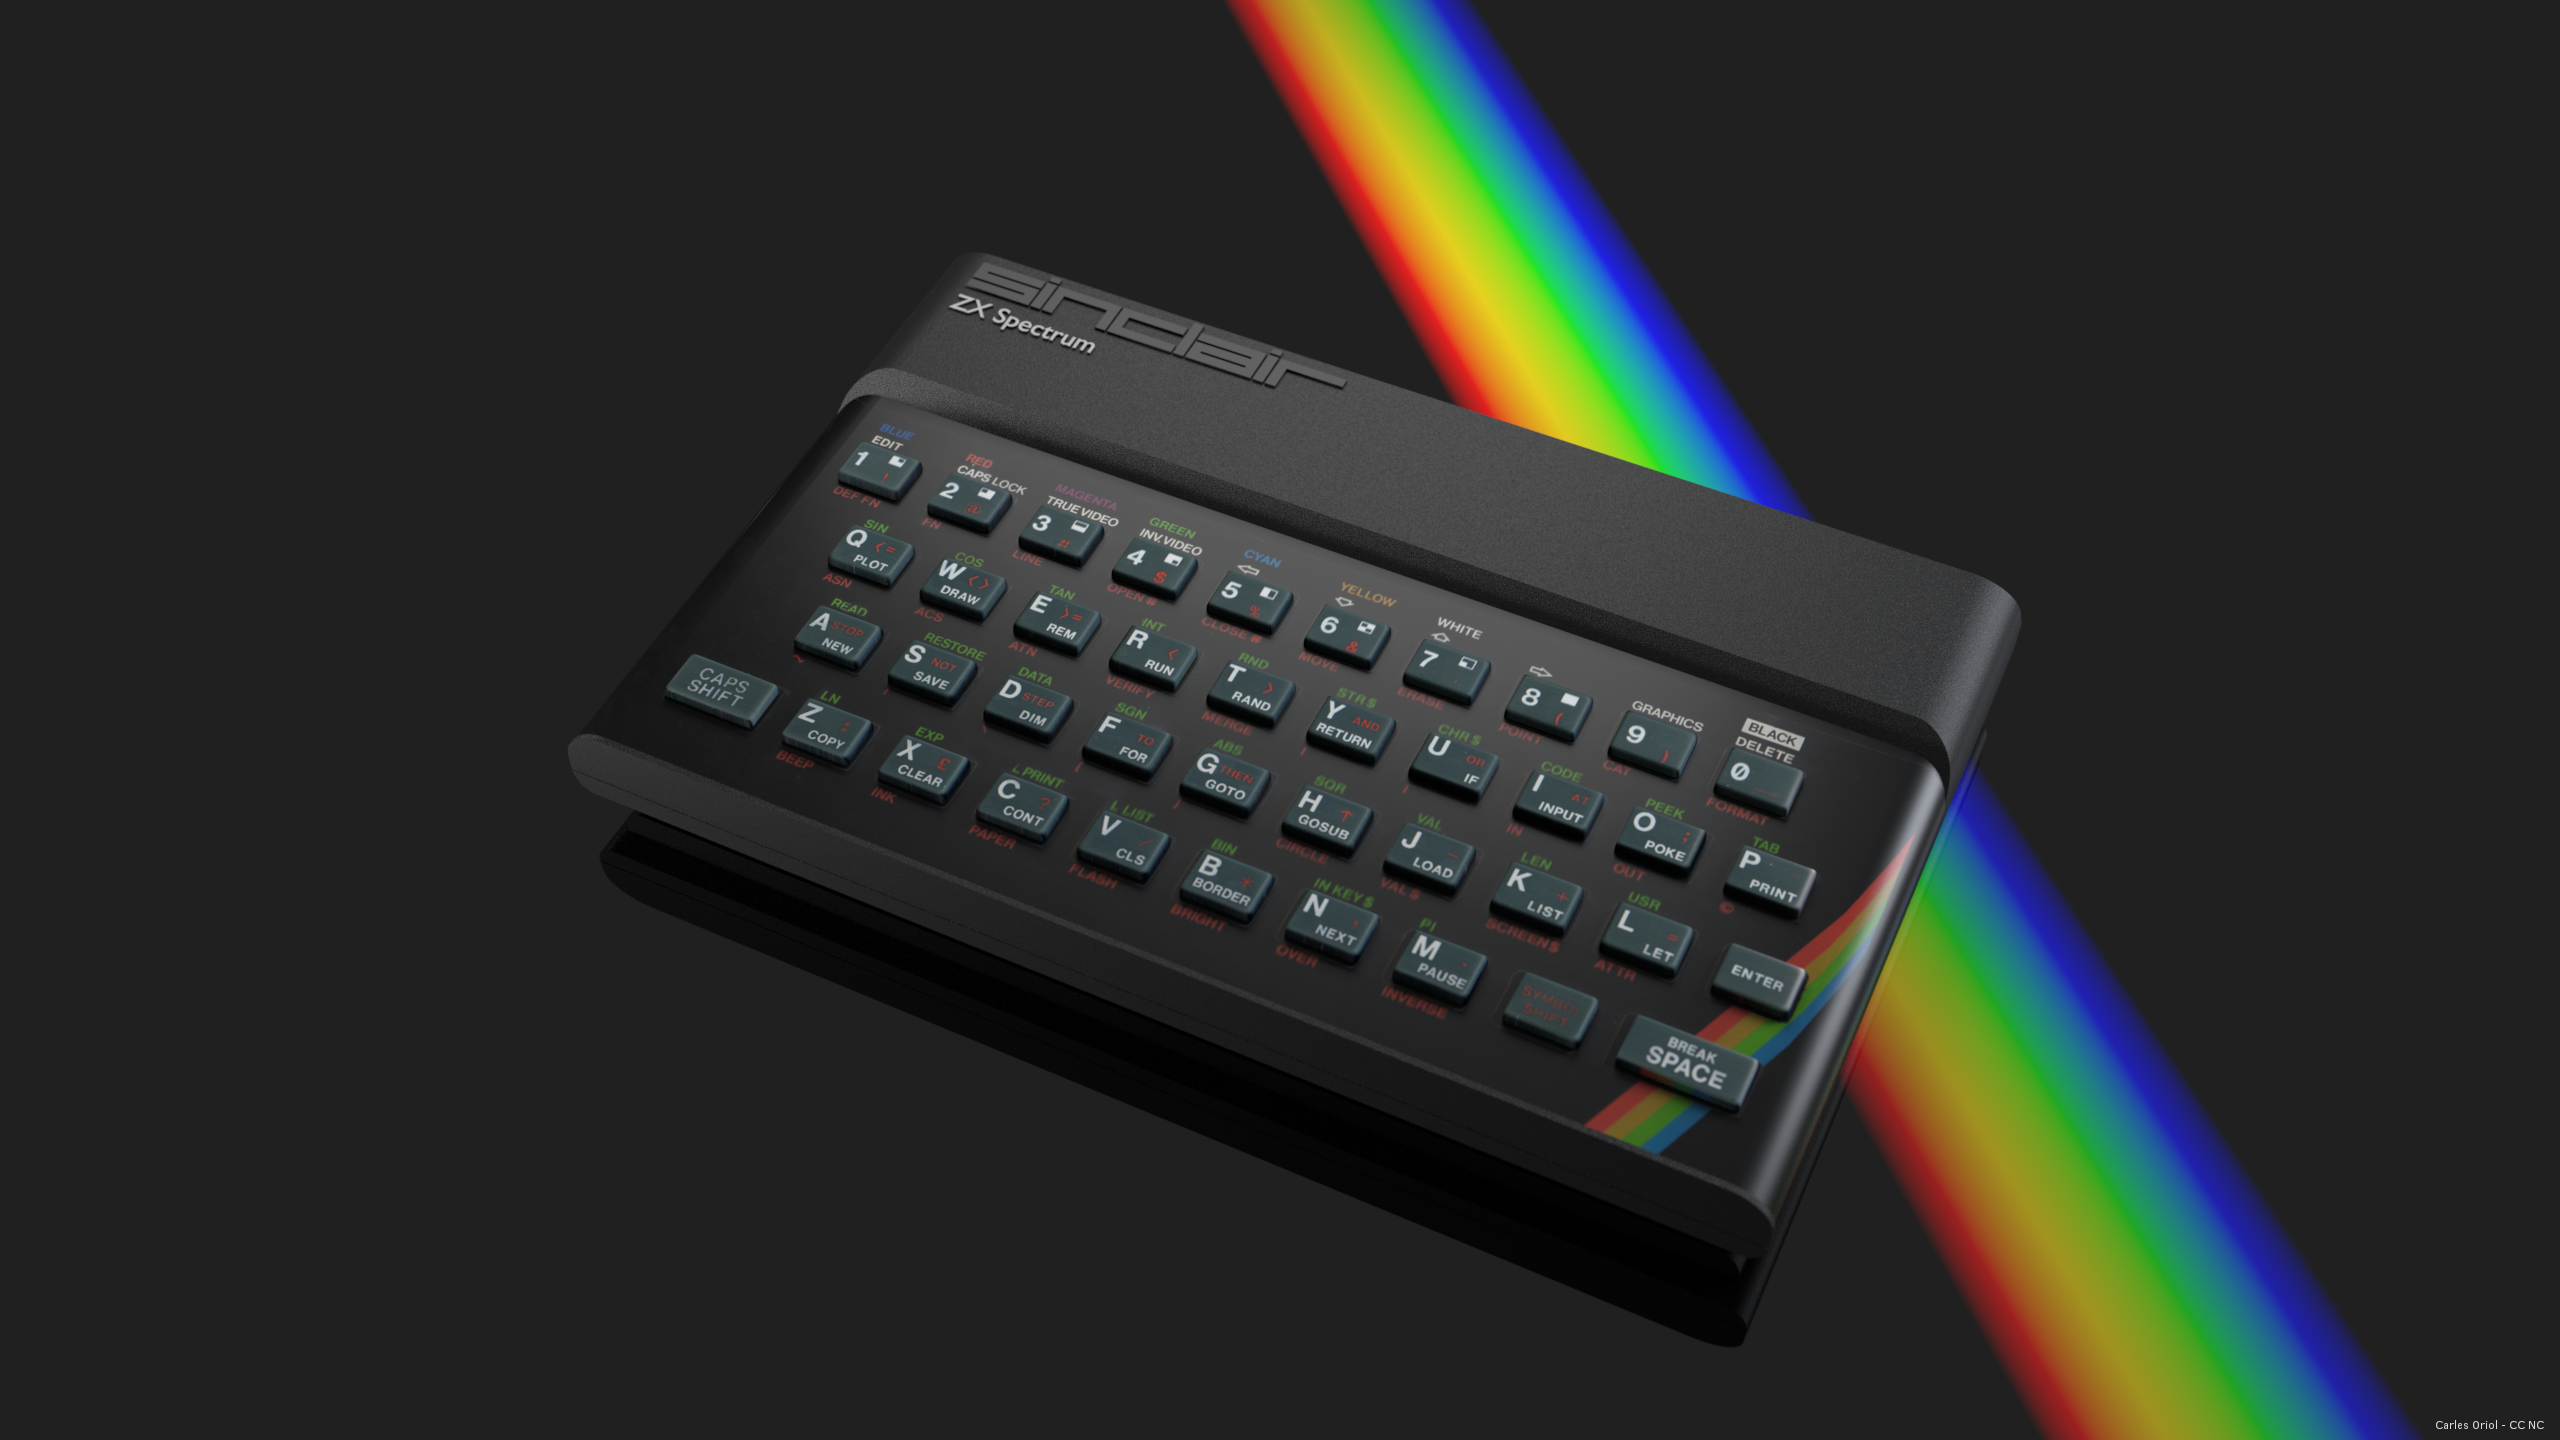 General 2560x1440 Zx Spectrum  keyboards technology